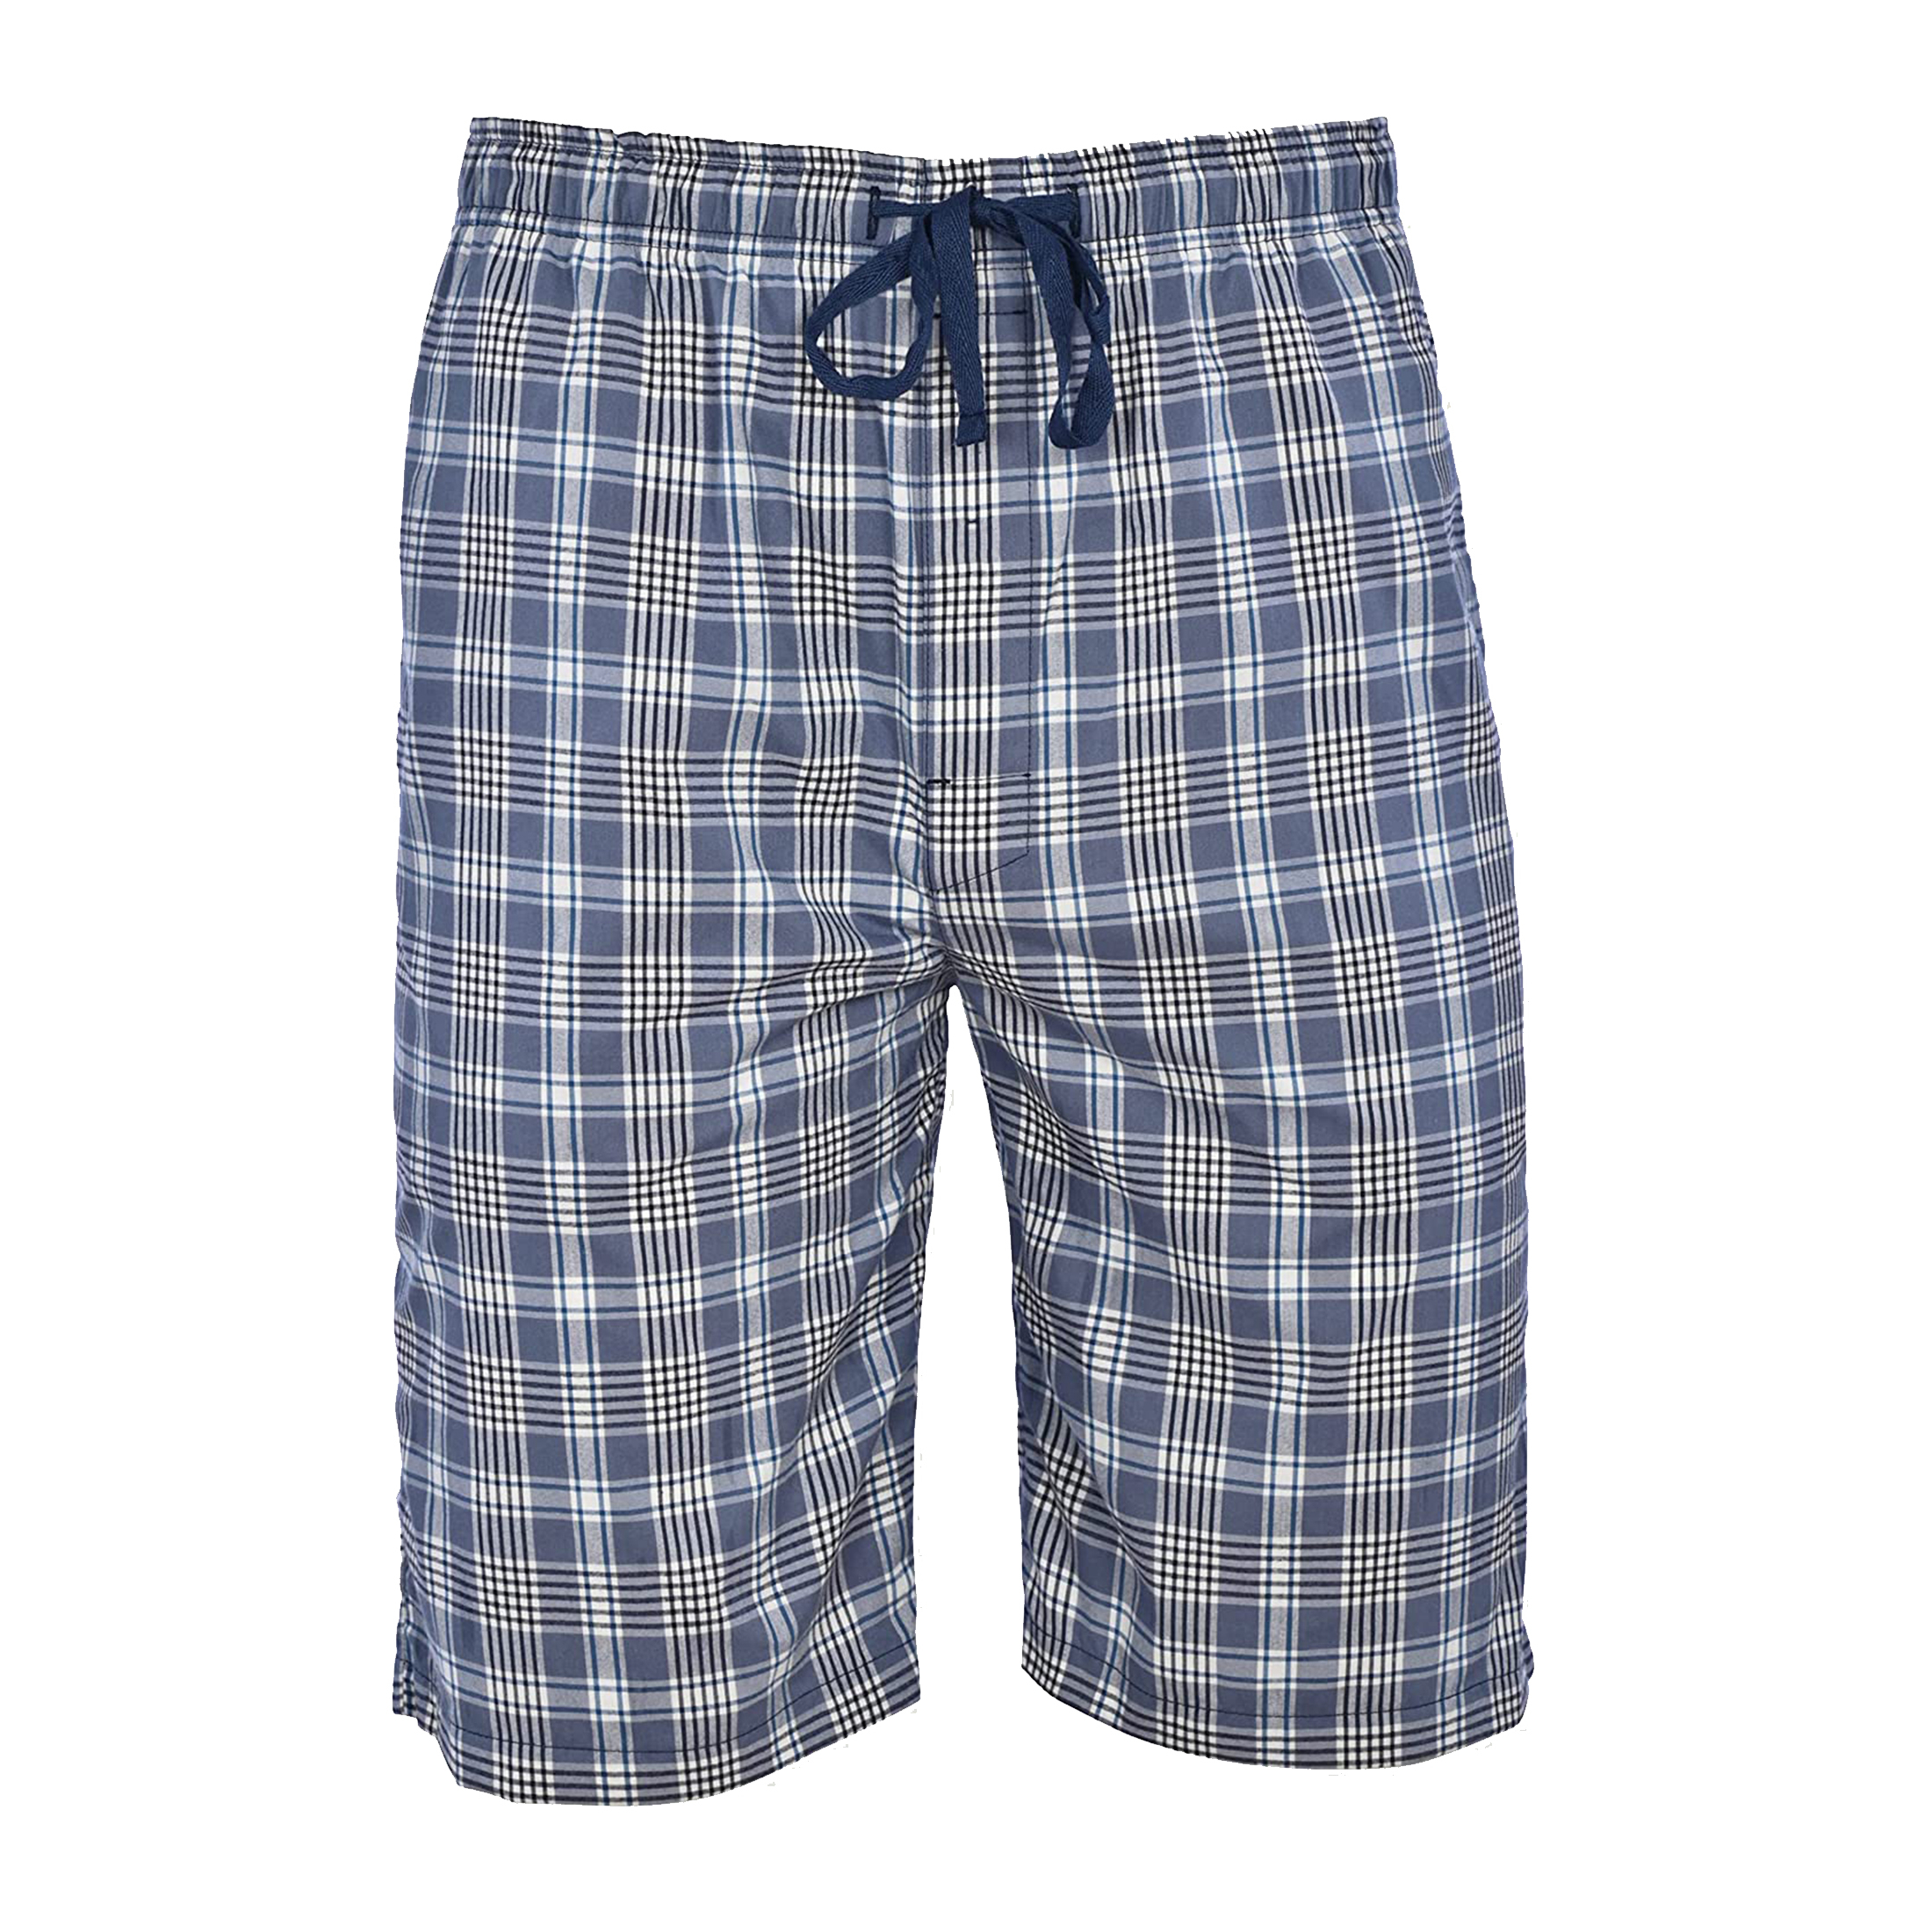 Multi-Pack: Men's Ultra-Soft Jersey Knit Sleep Lounge Pajama Shorts For Sleepwear - Plaid, 3 Pack, Large